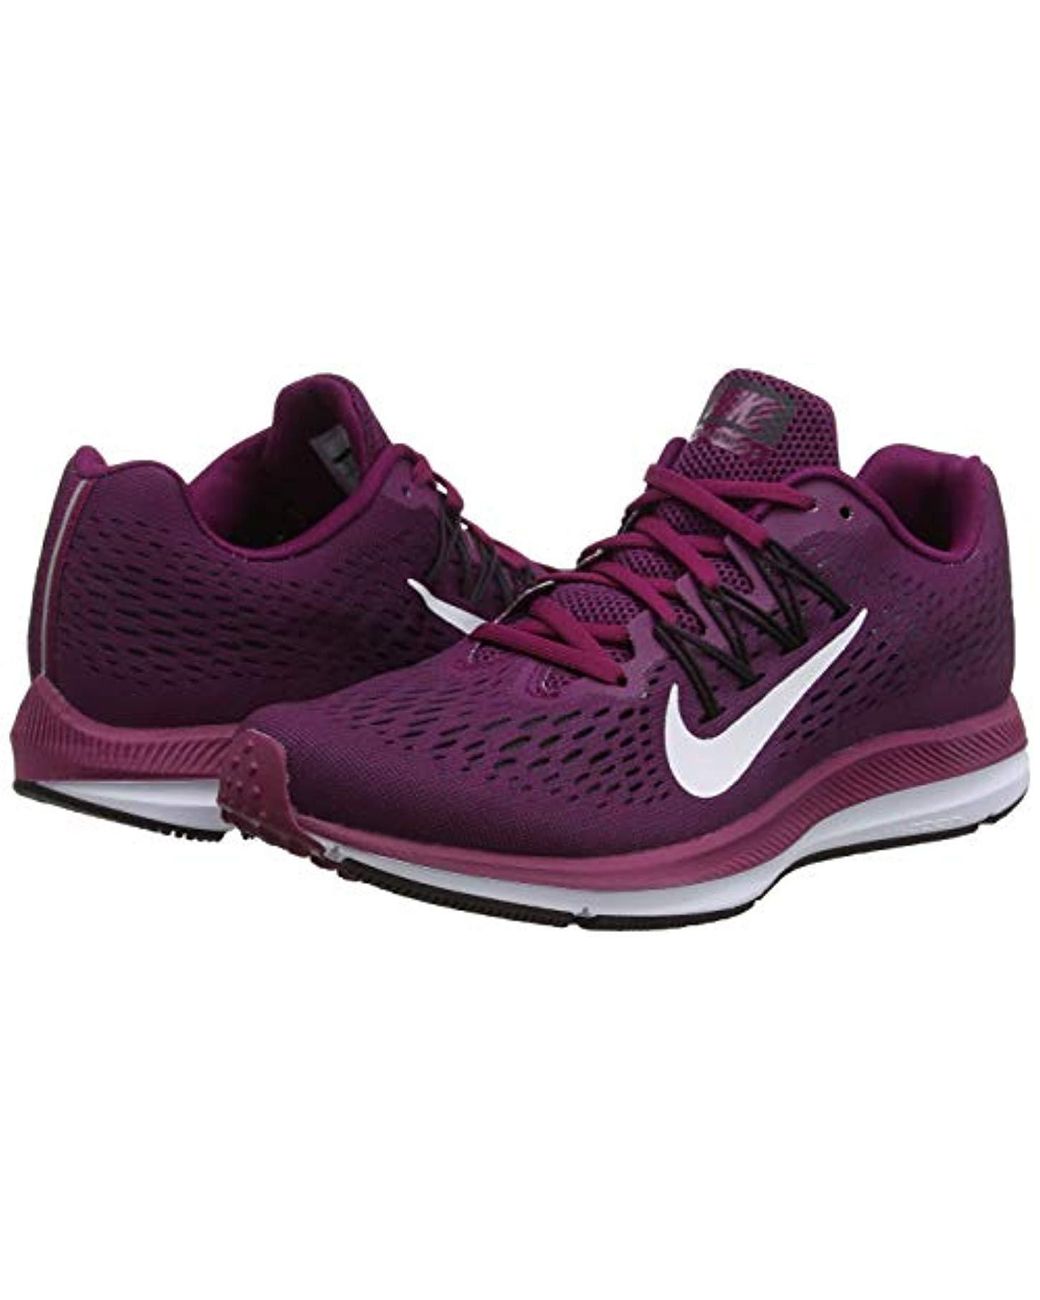 WMNS Zoom Winflo 5, Chaussures de Running Femme Nike en coloris Violet |  Lyst